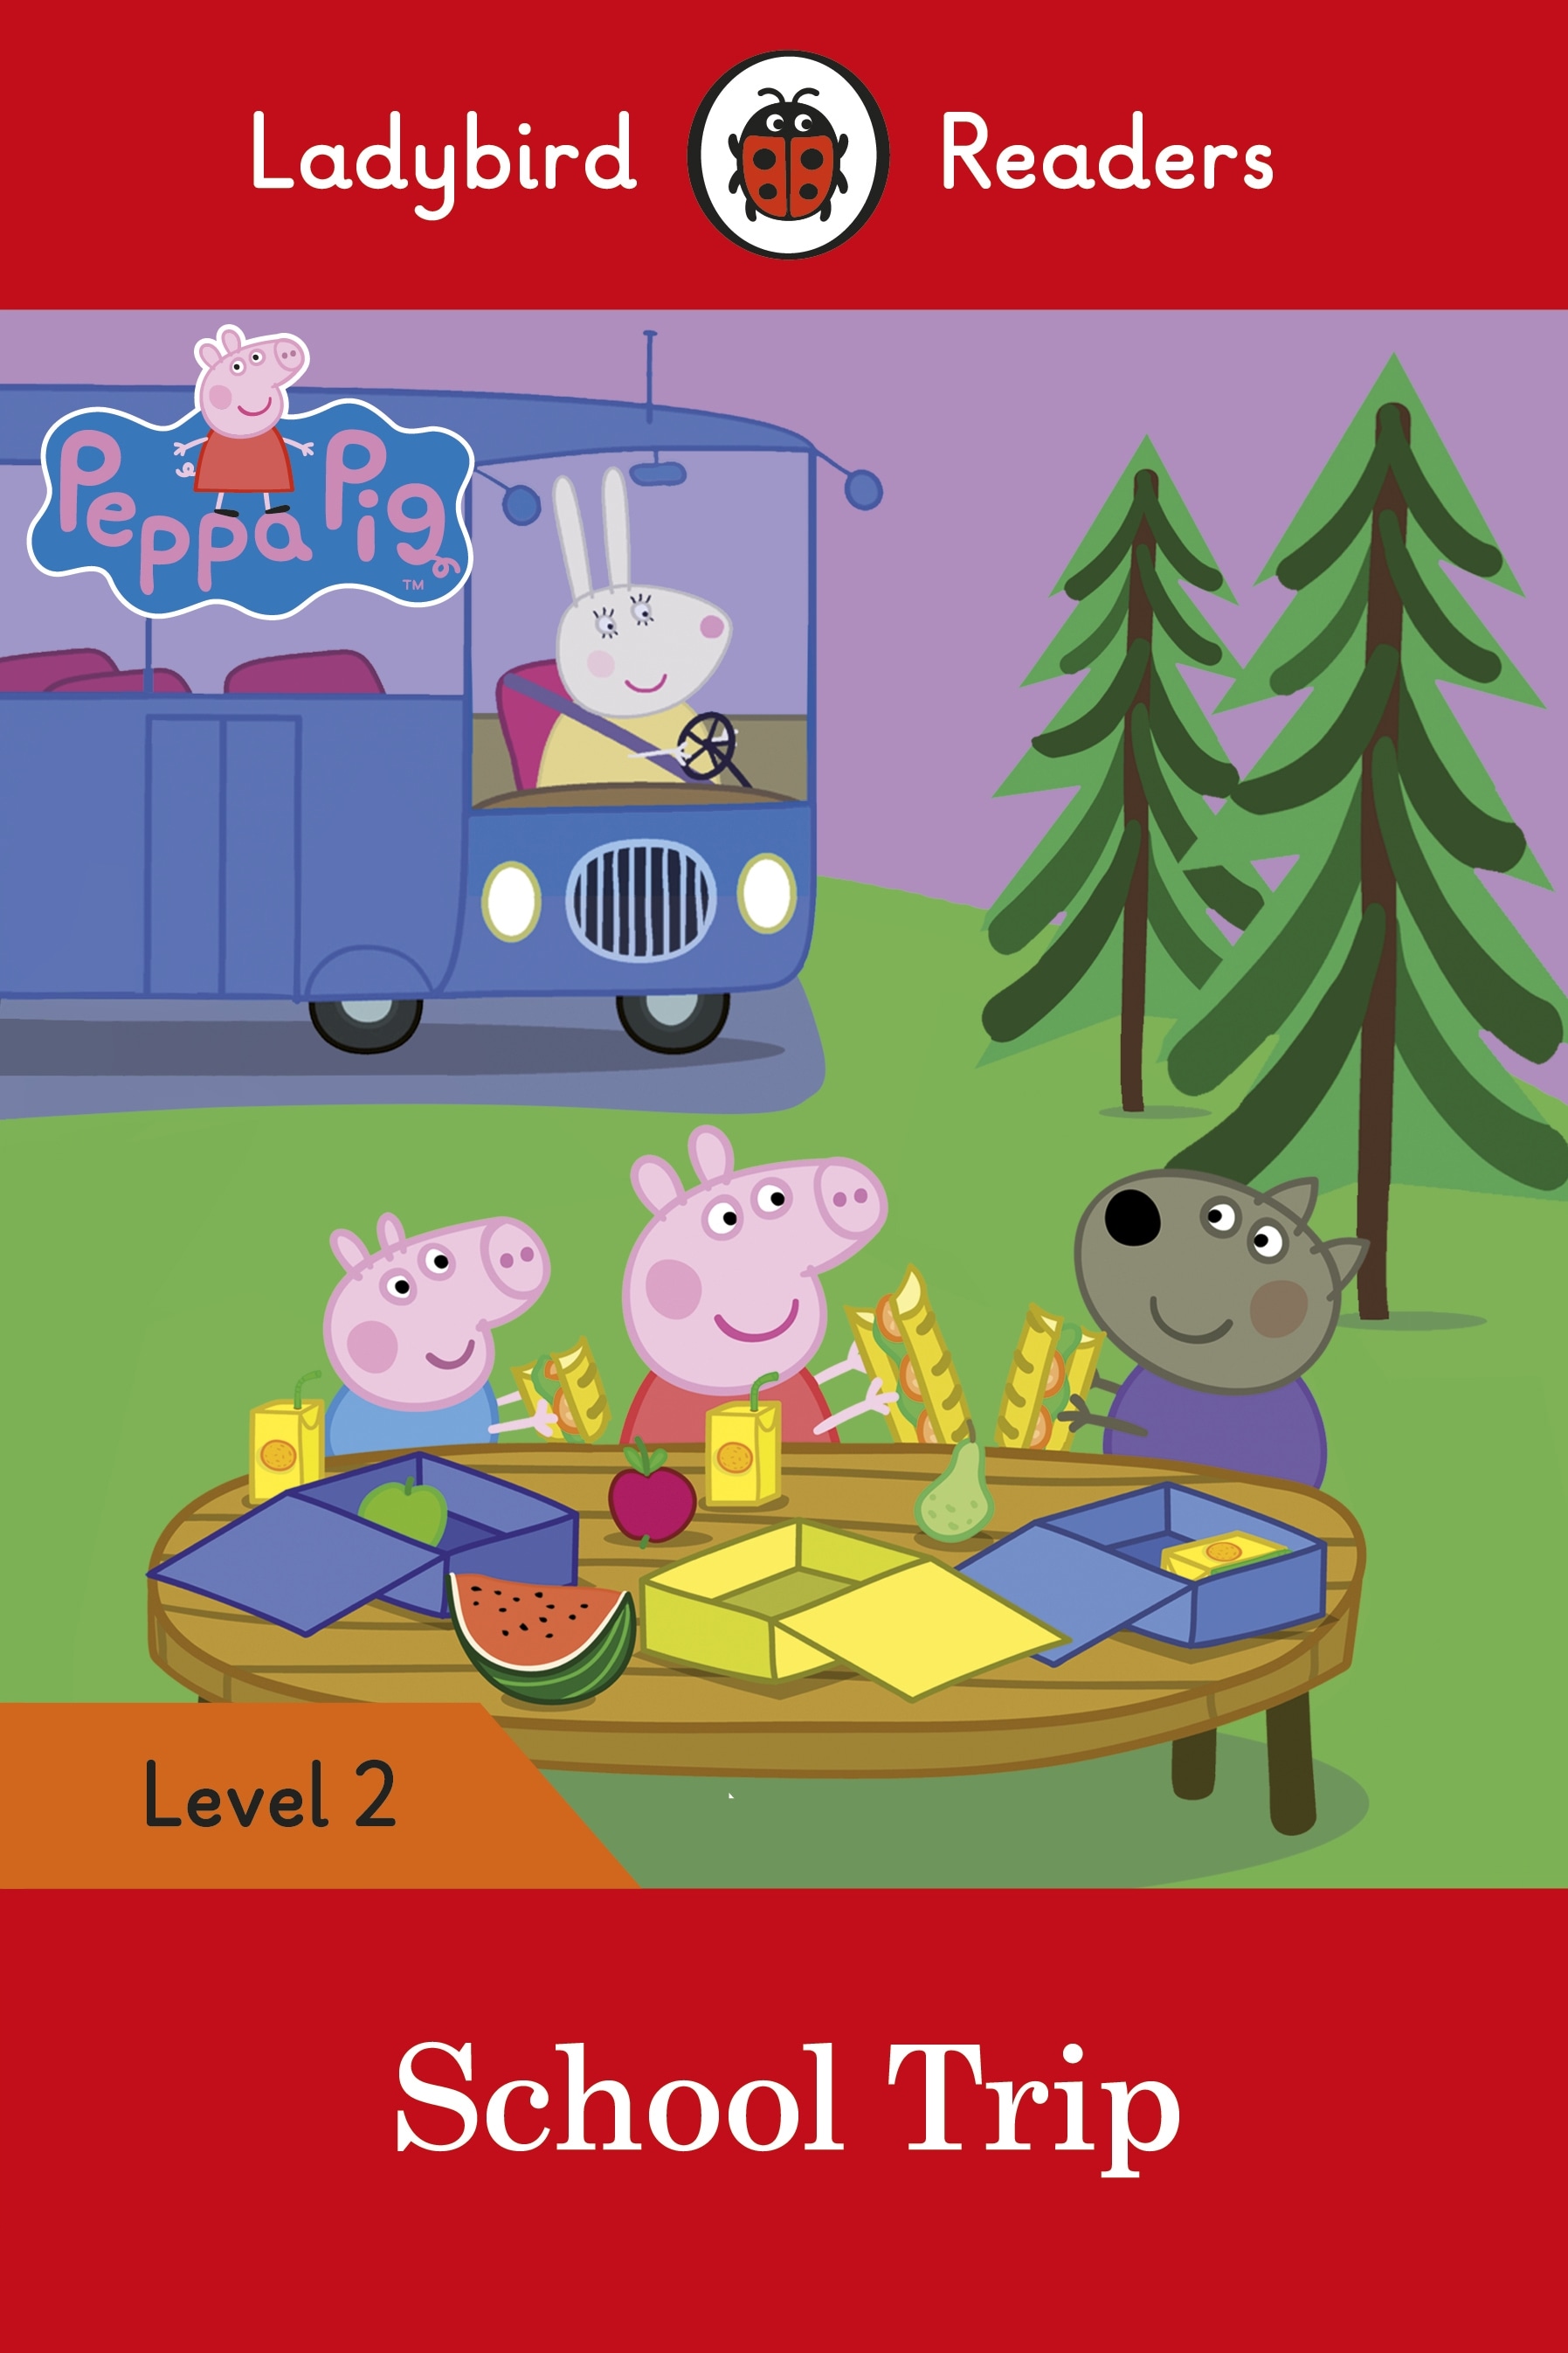 Book “Peppa Pig: School Trip - Ladybird Readers Level 2” by Ladybird, Peppa Pig — January 26, 2017